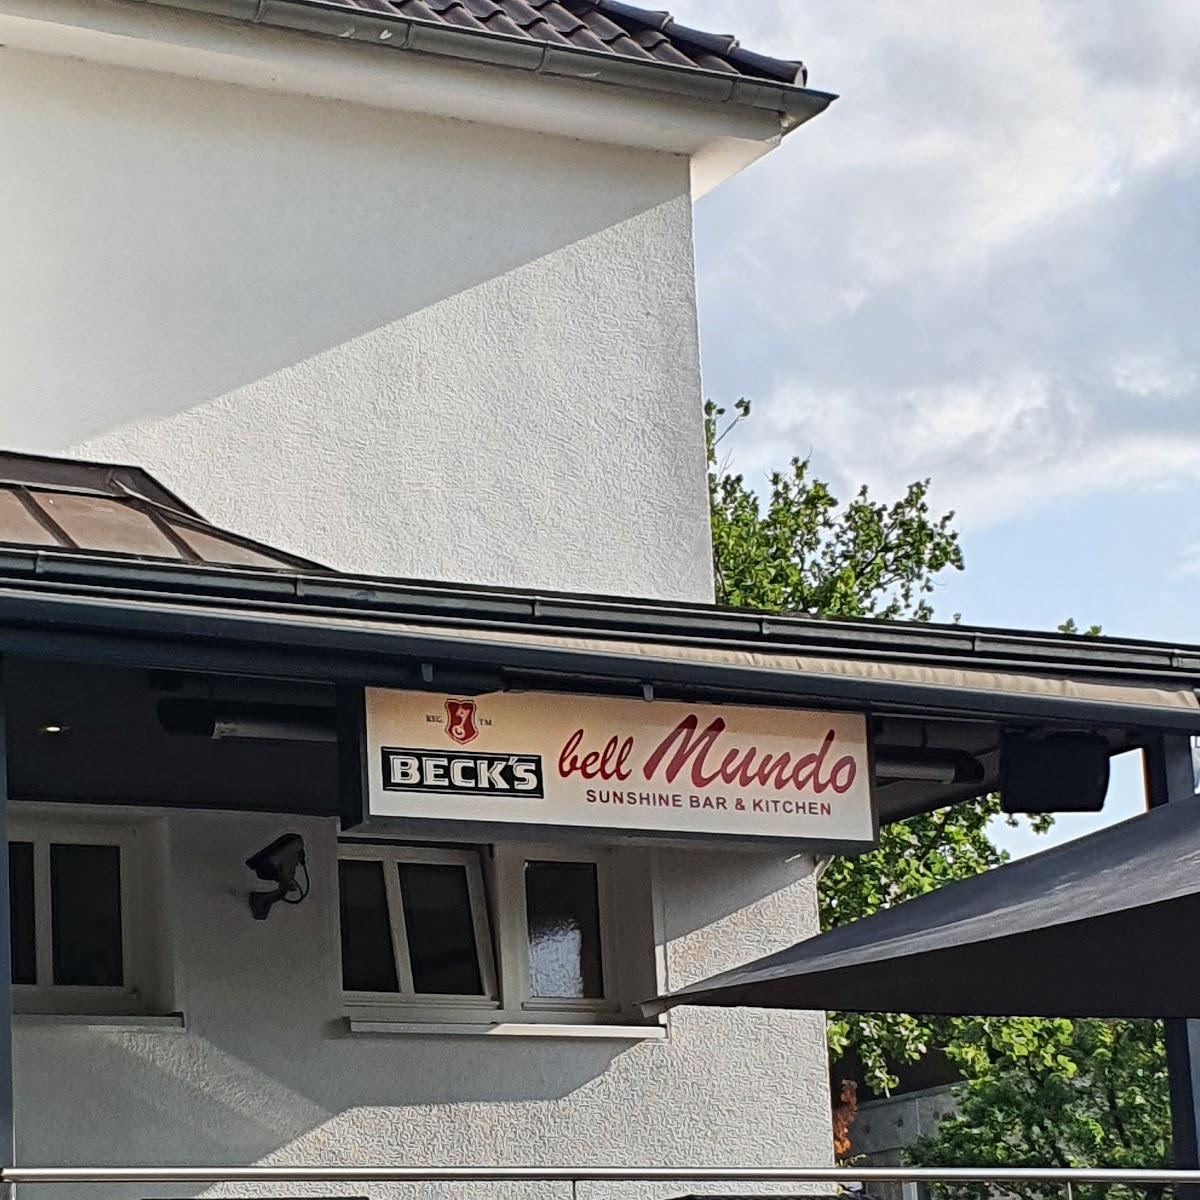 Restaurant "bell Mundo" in Hannover